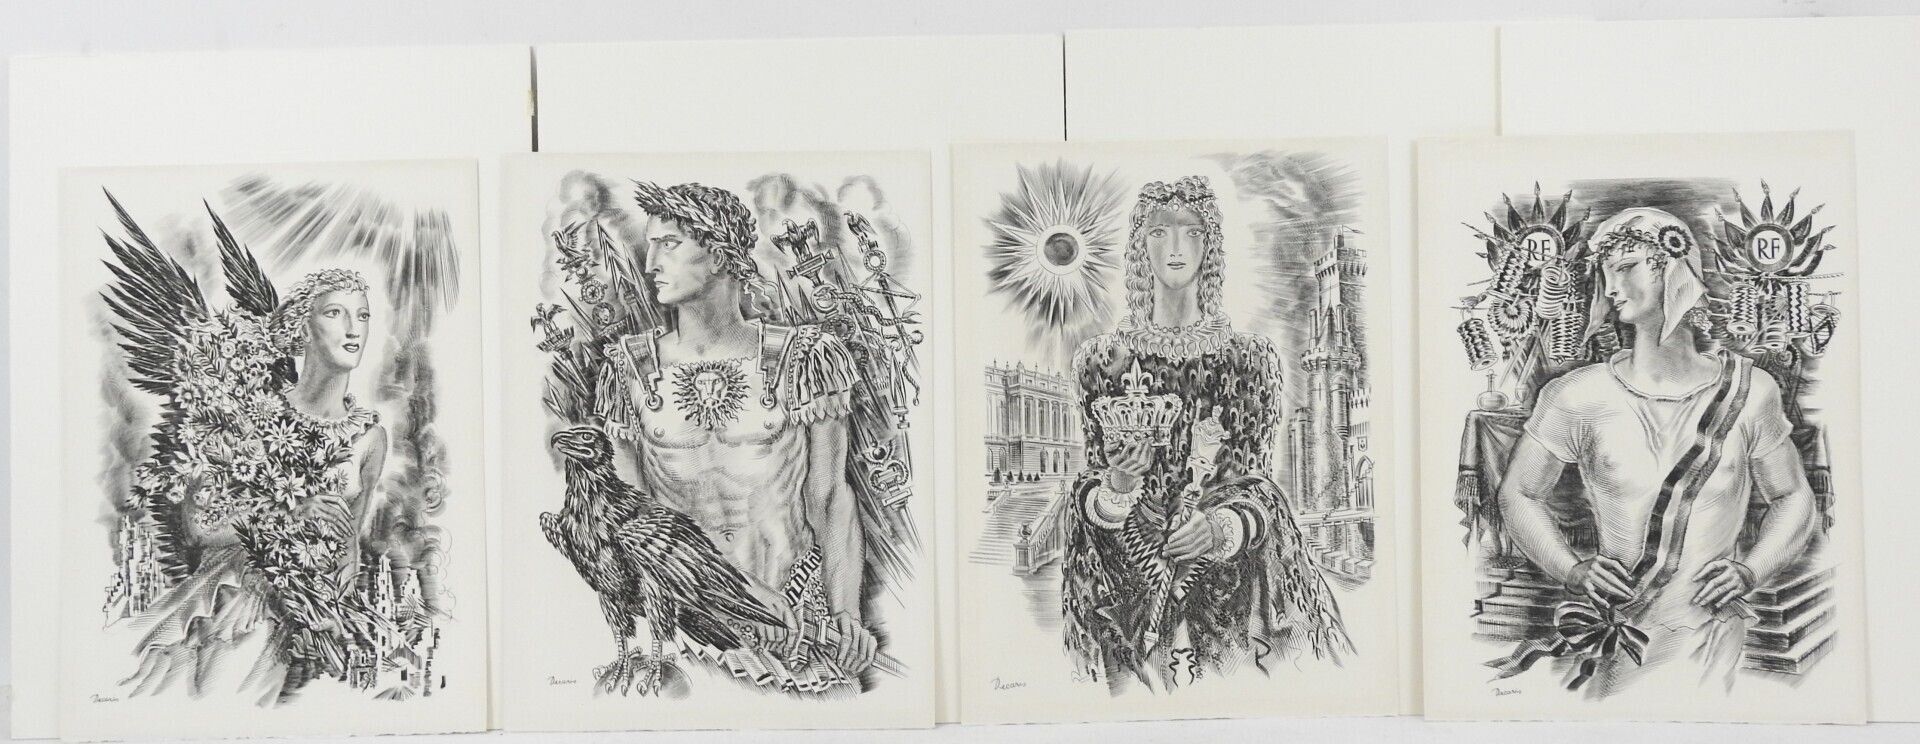 Null 阿尔伯特-德卡里斯（1901-1988）：四幅版画组曲，包括《罗马帝国》、《欧洲与帝国》。在盘中签名。33 x 24.5厘米。